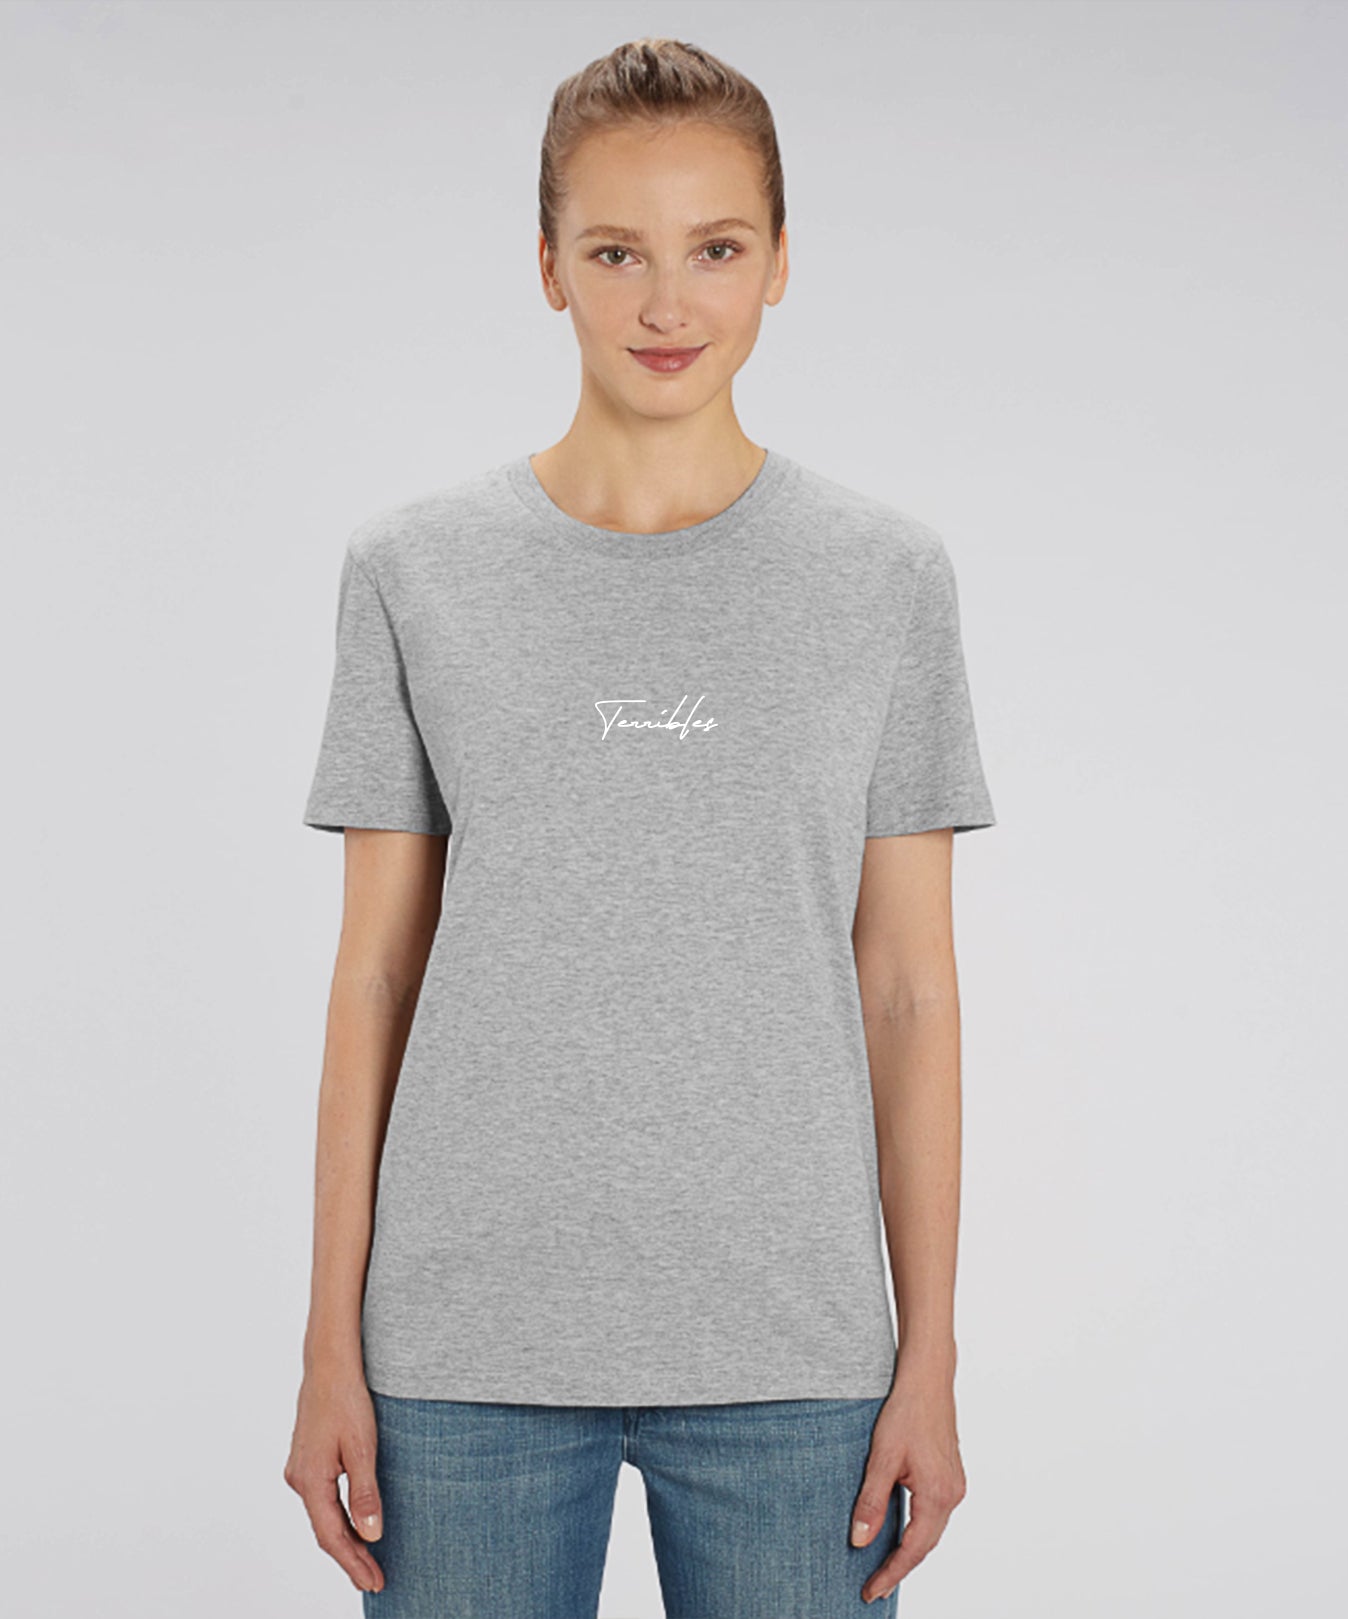 T-Shirt Unisexe Gris avec logo 'Terribles' Blanc - Terribles Nantais